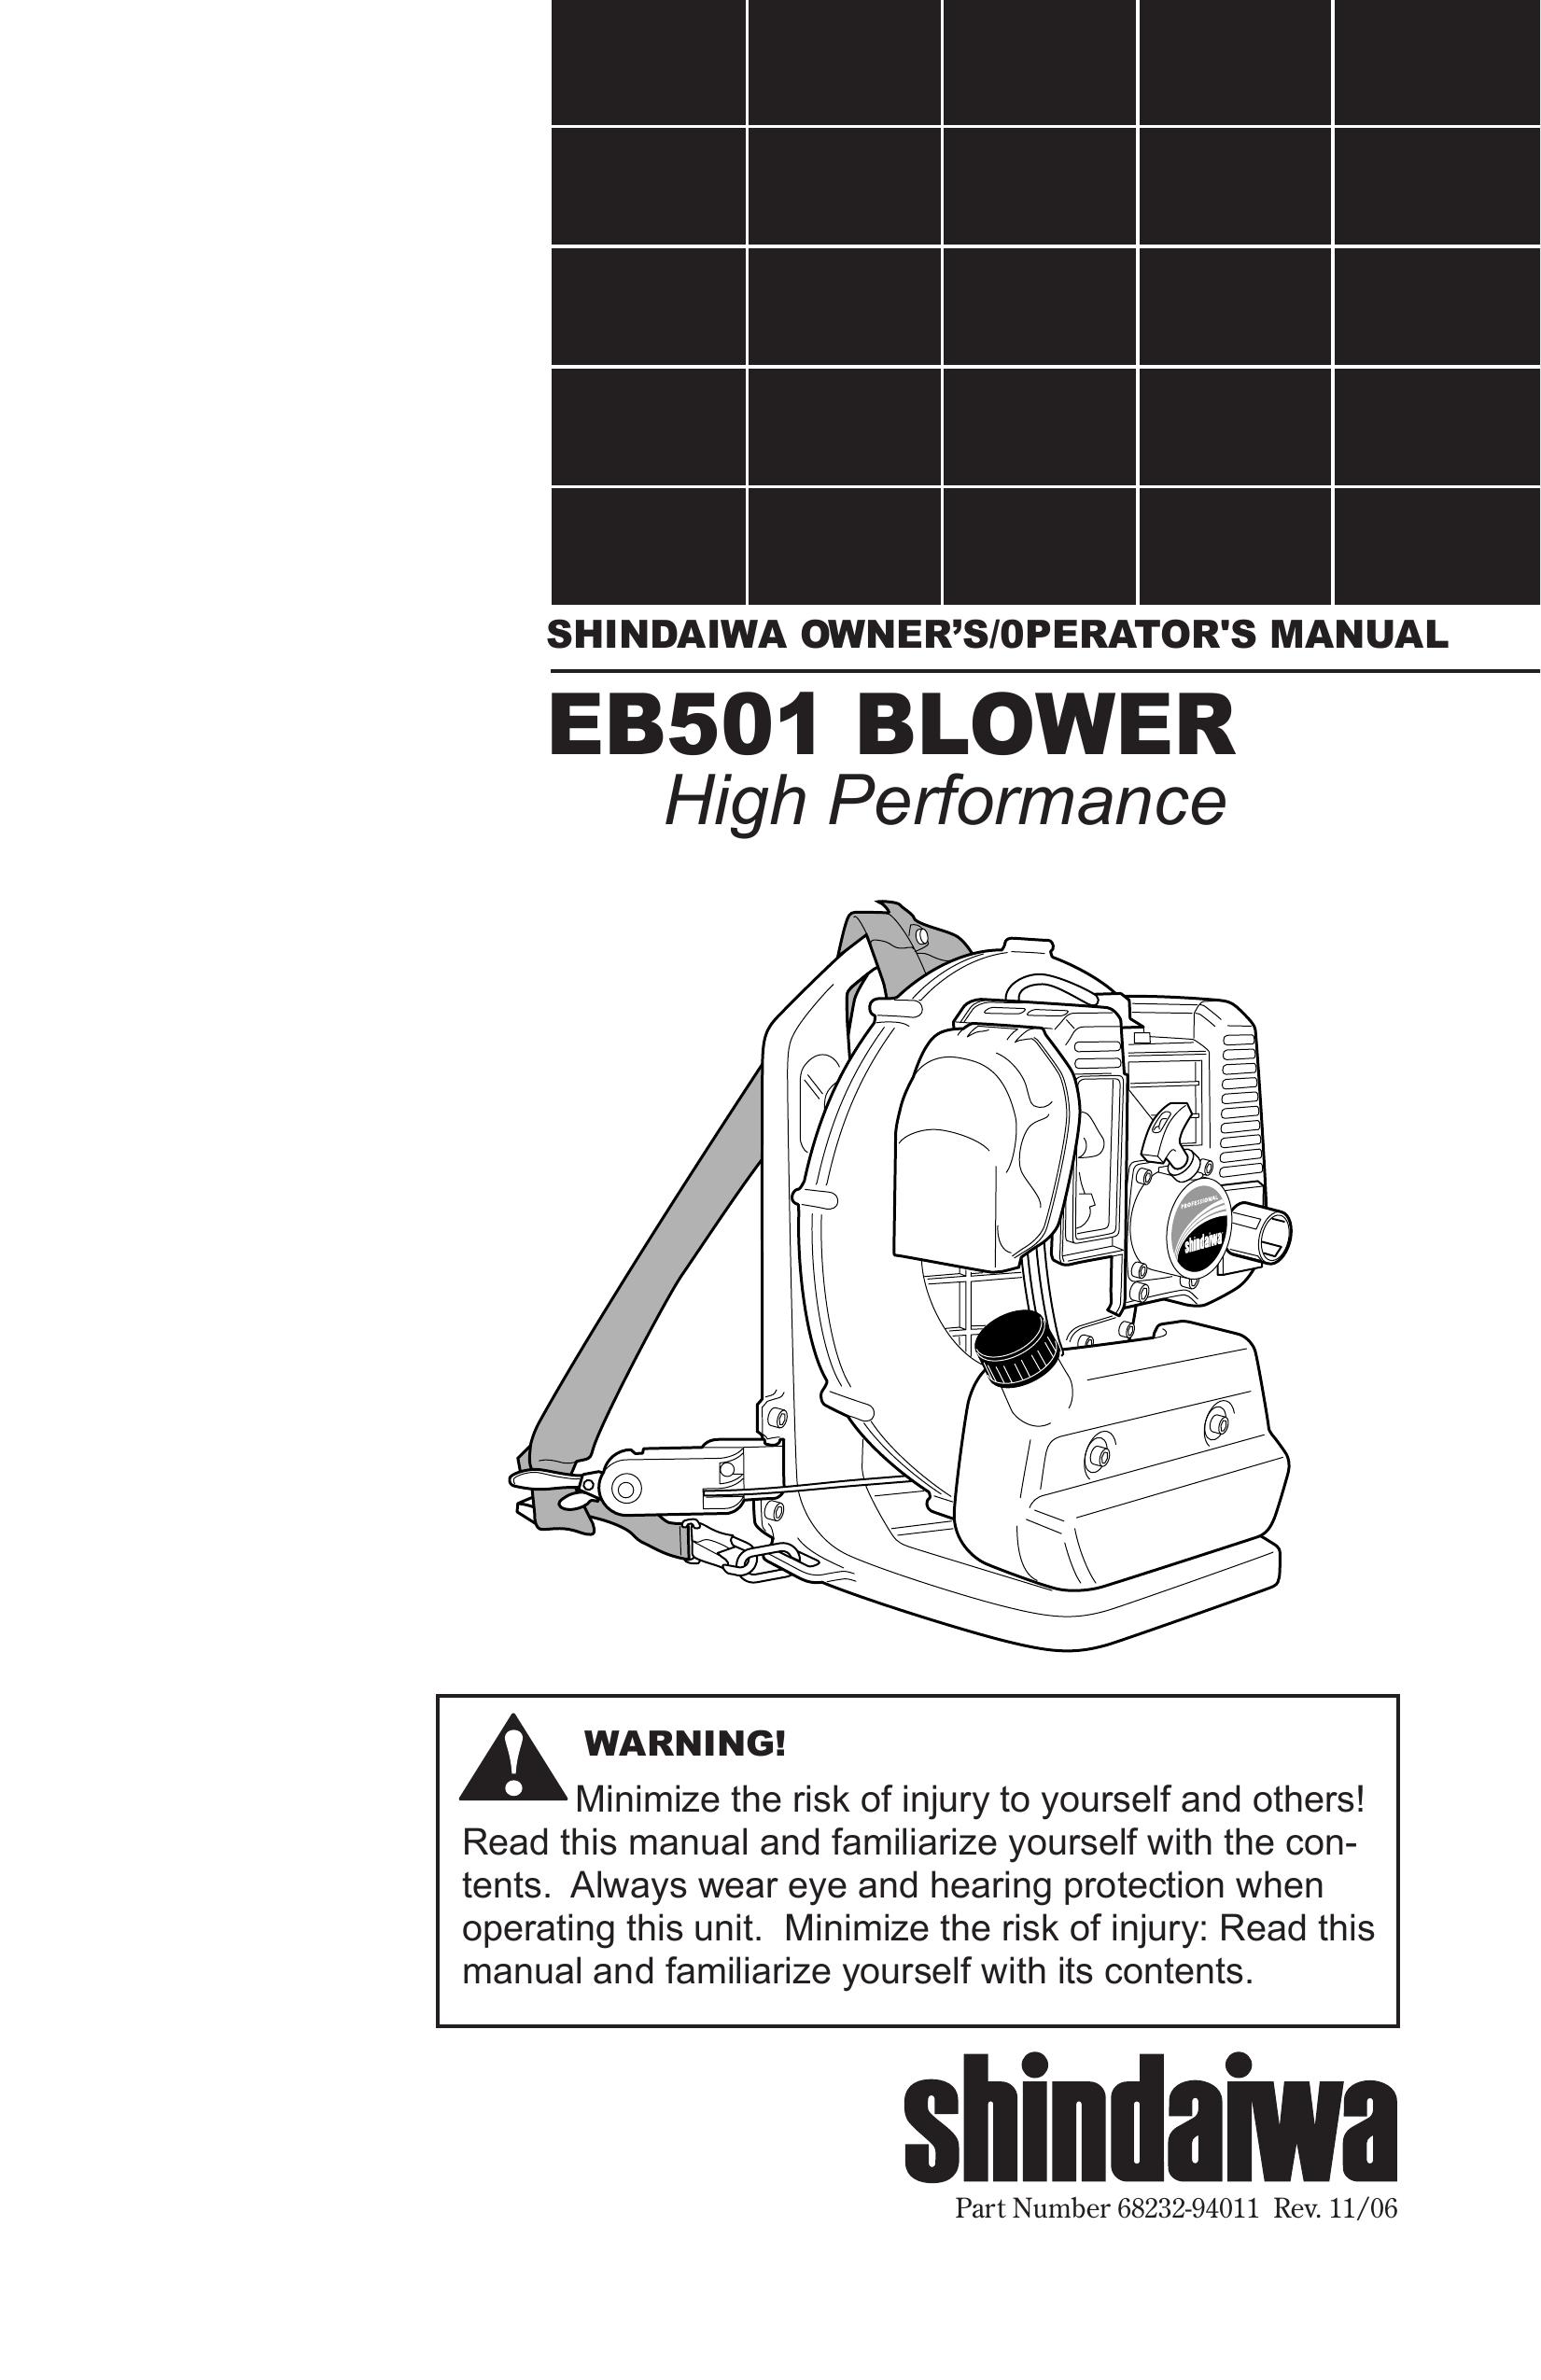 Shindaiwa EB501EPA2 Blower User Manual